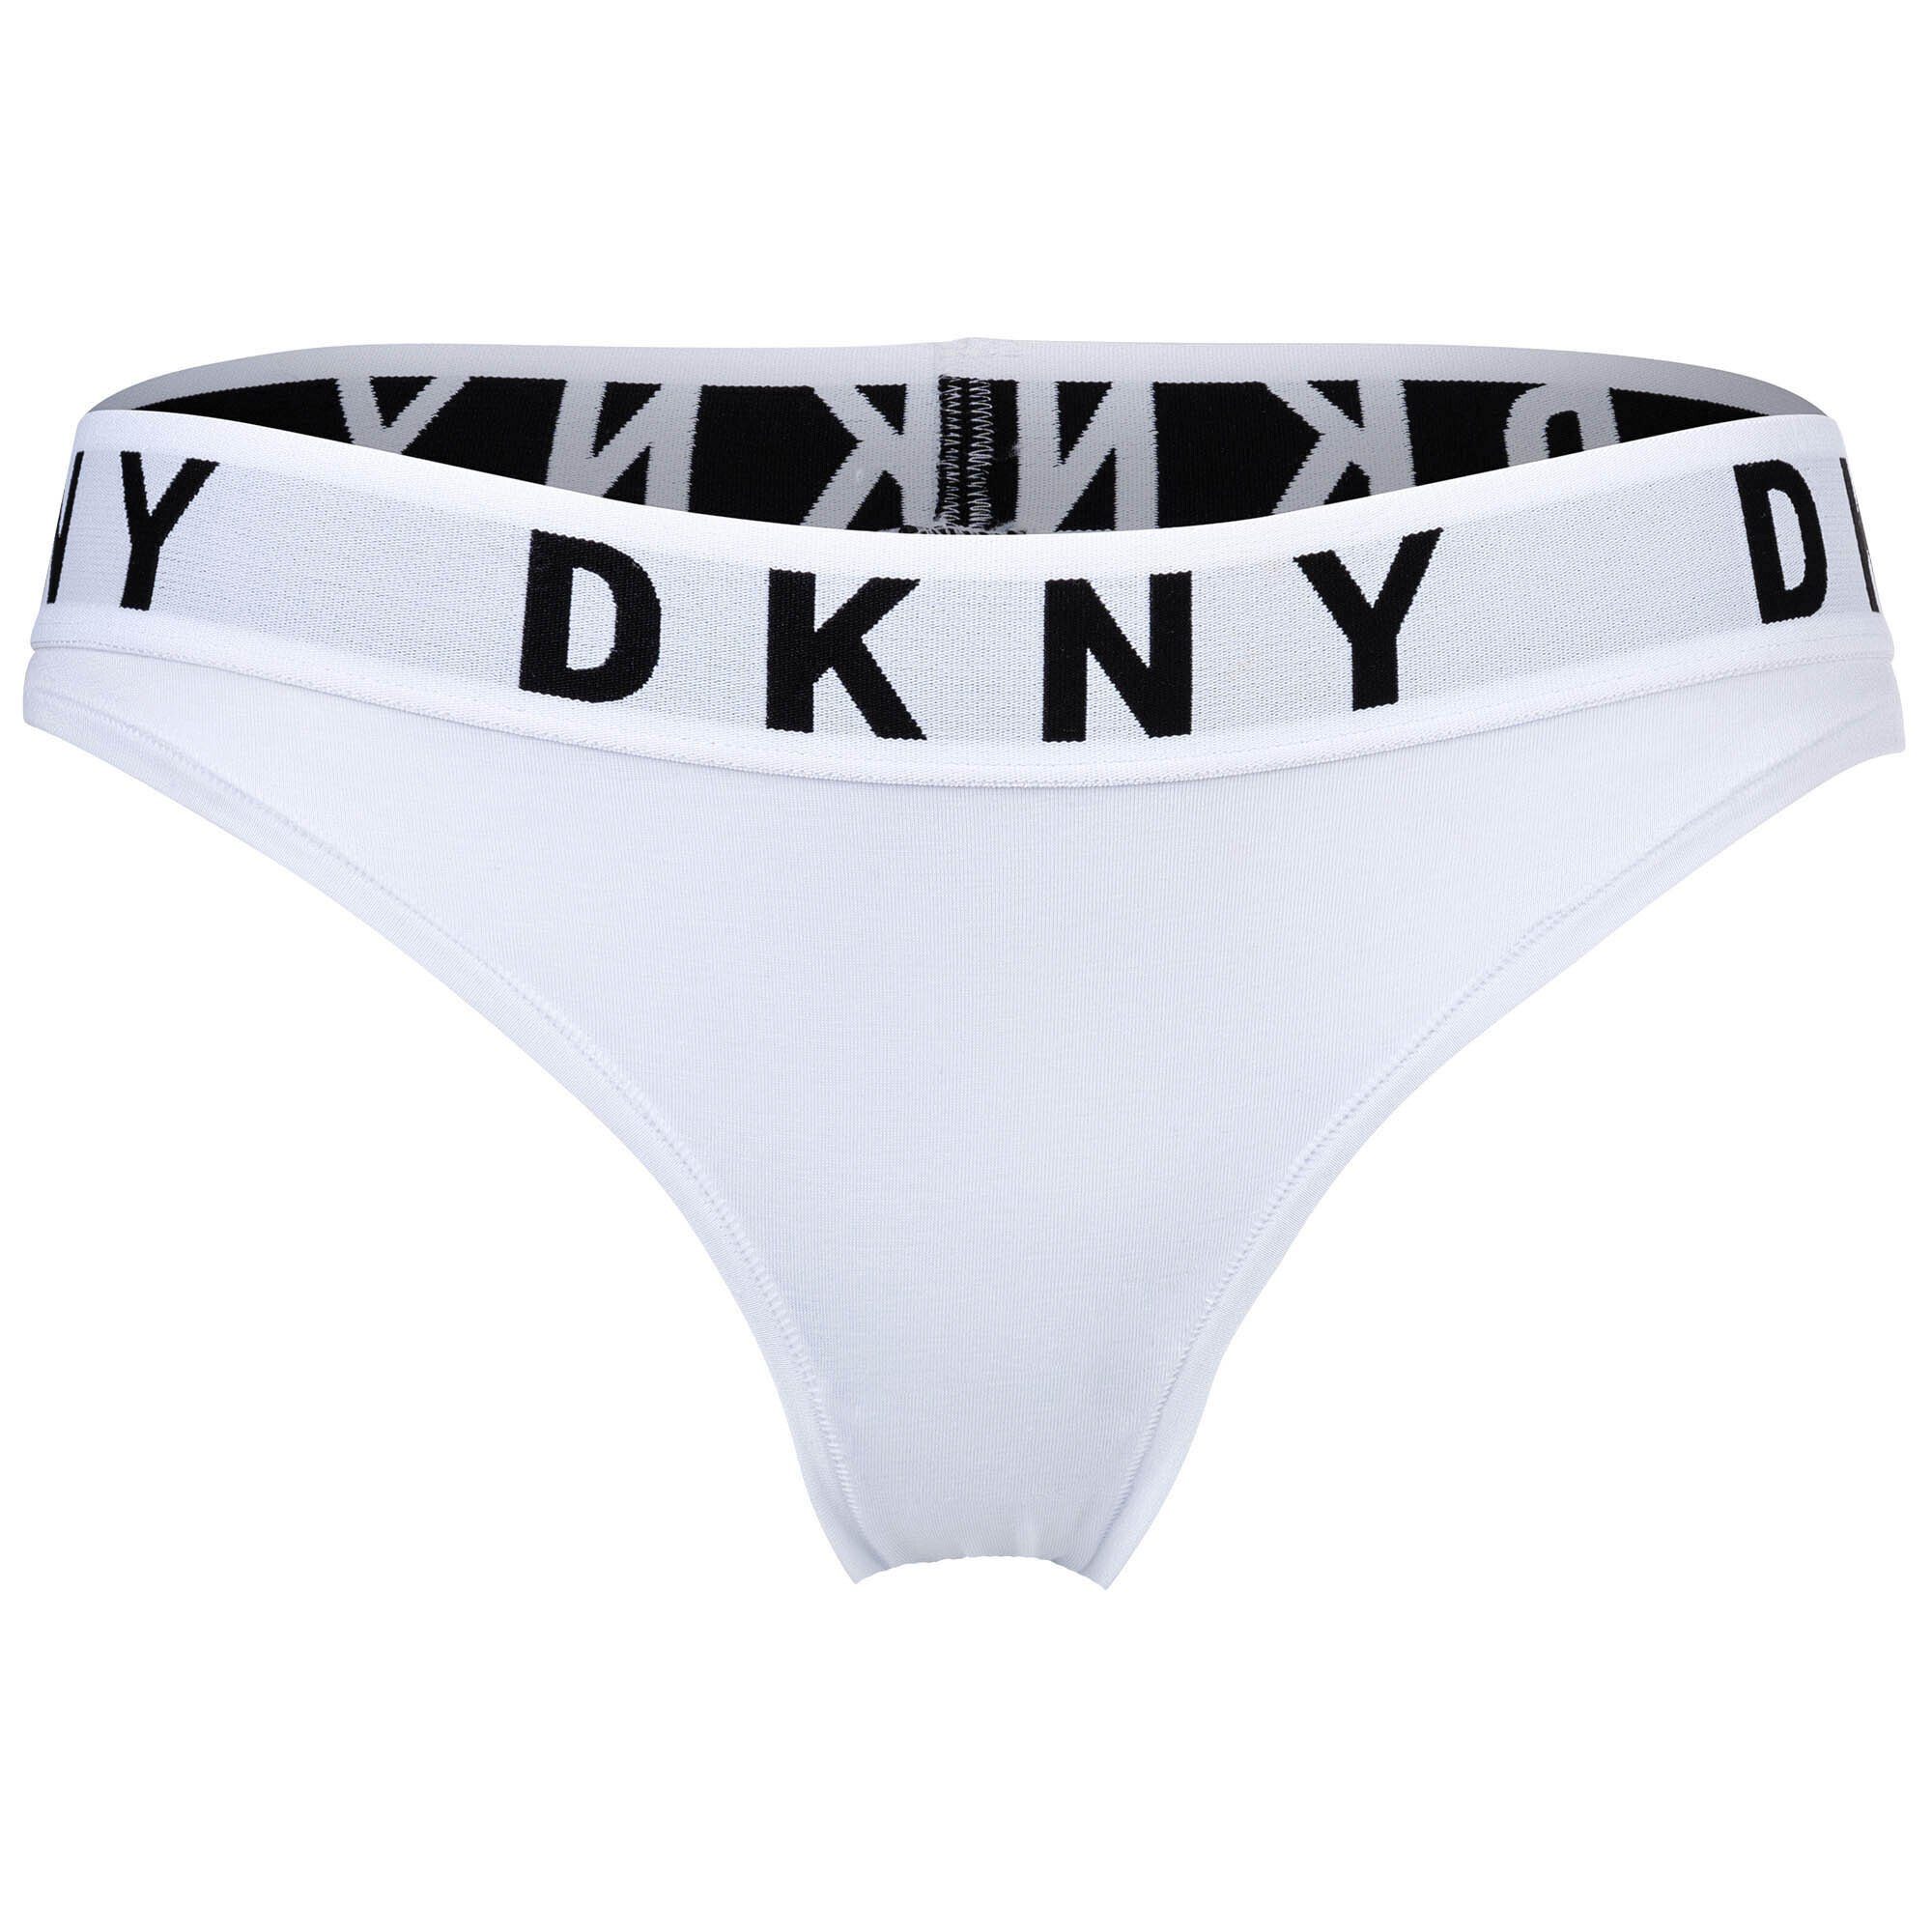 Slip - Brief, Weiß DKNY Panty Cotton Modal Stretch Damen